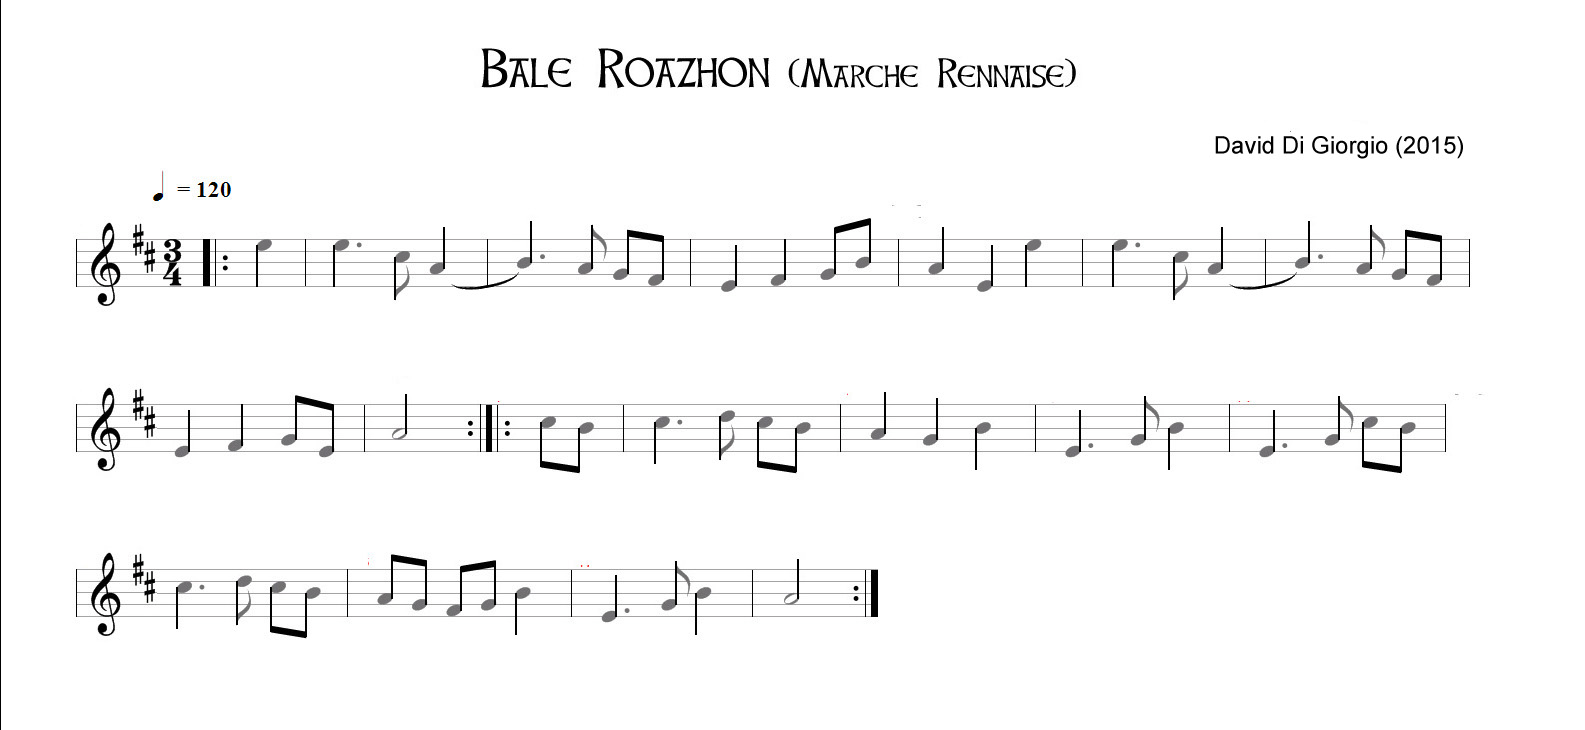 Bale Roazhon